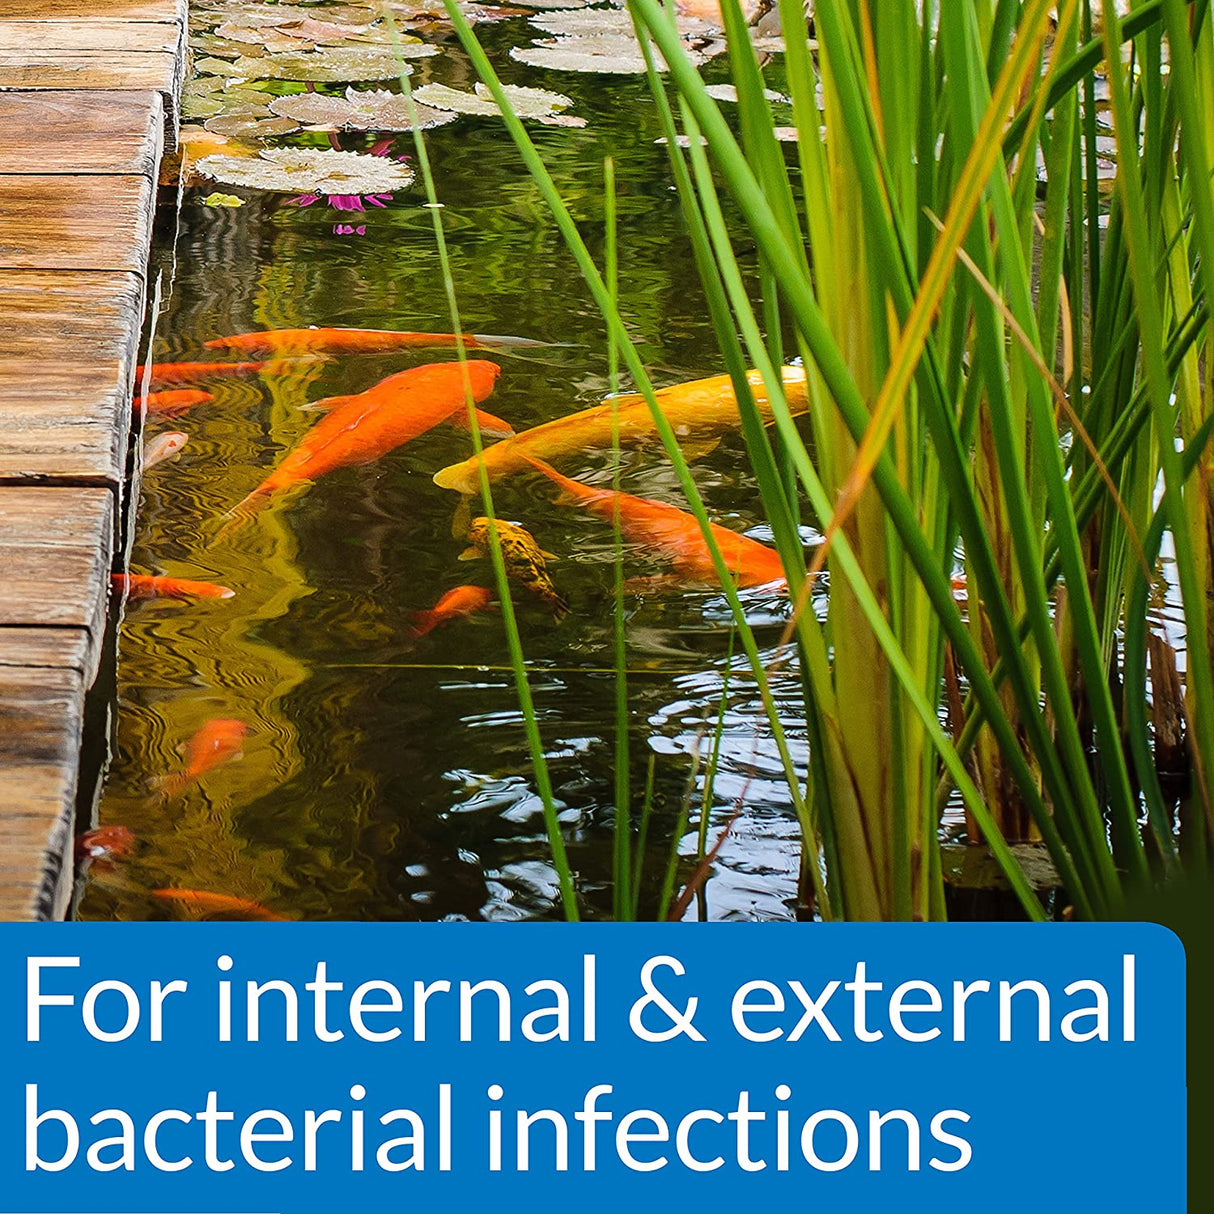 API Pond Pimafix Treats Fungal Fish Infections for Koi and Goldfish - PetMountain.com